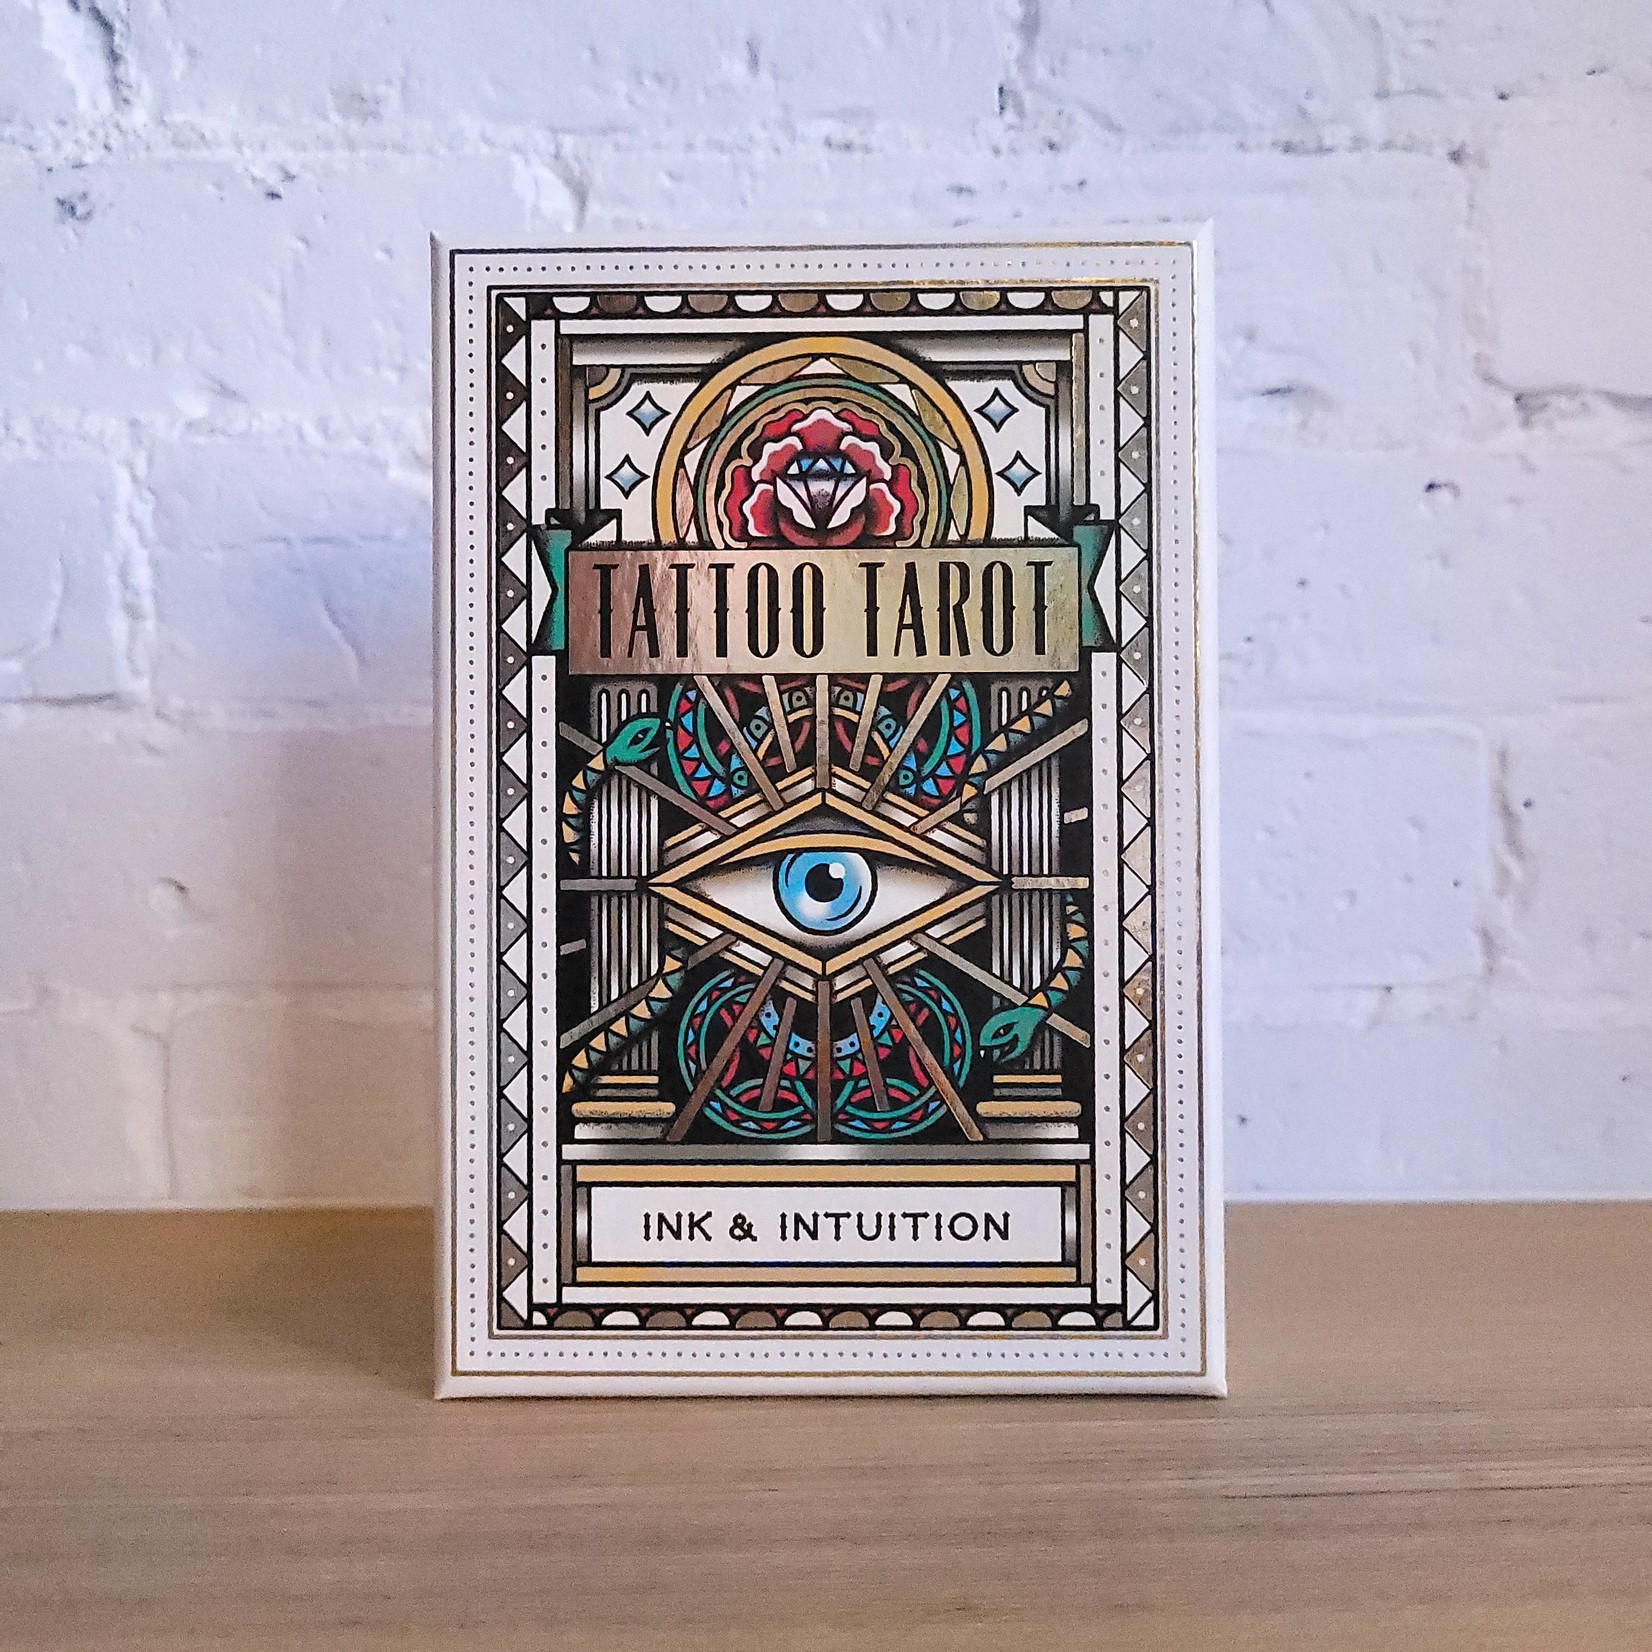 Lawrence King Publishing Tattoo Tarot: Ink & Intuiton